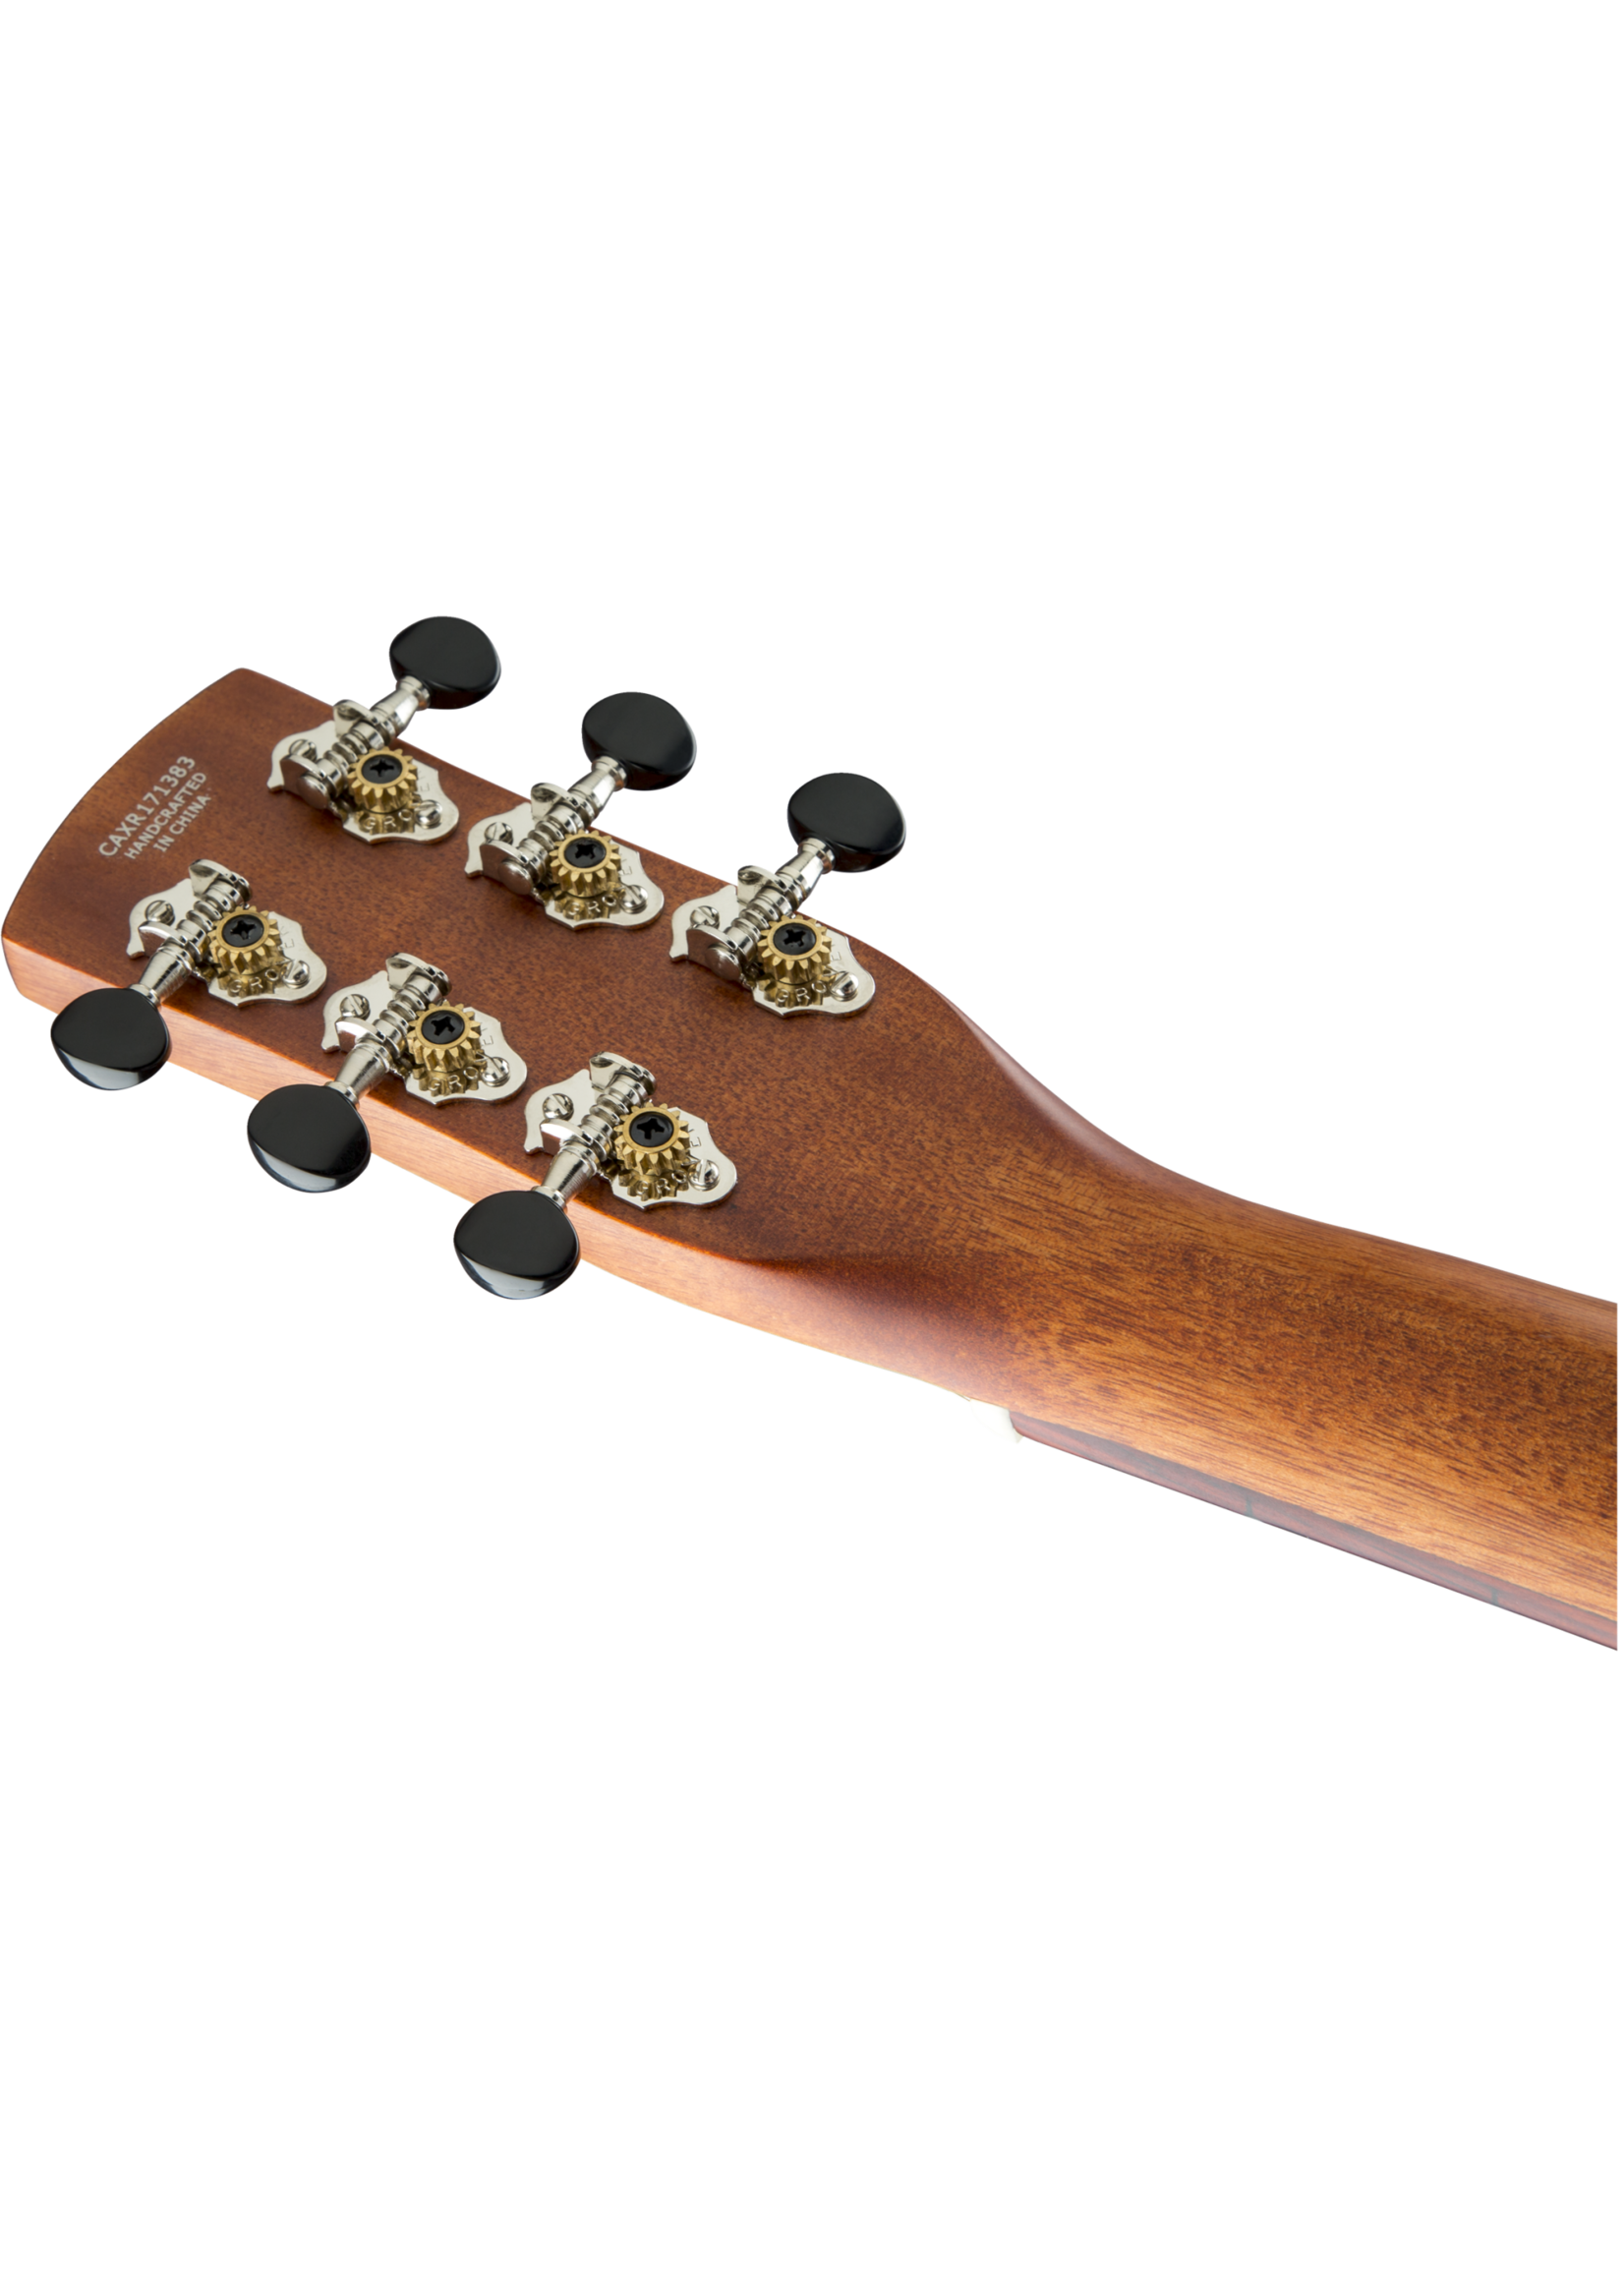 Gretsch Gretsch G9201 Honey Dipper Round-Neck, Brass Body Biscuit Cone Resonator Guitar, Shed Roof Finish